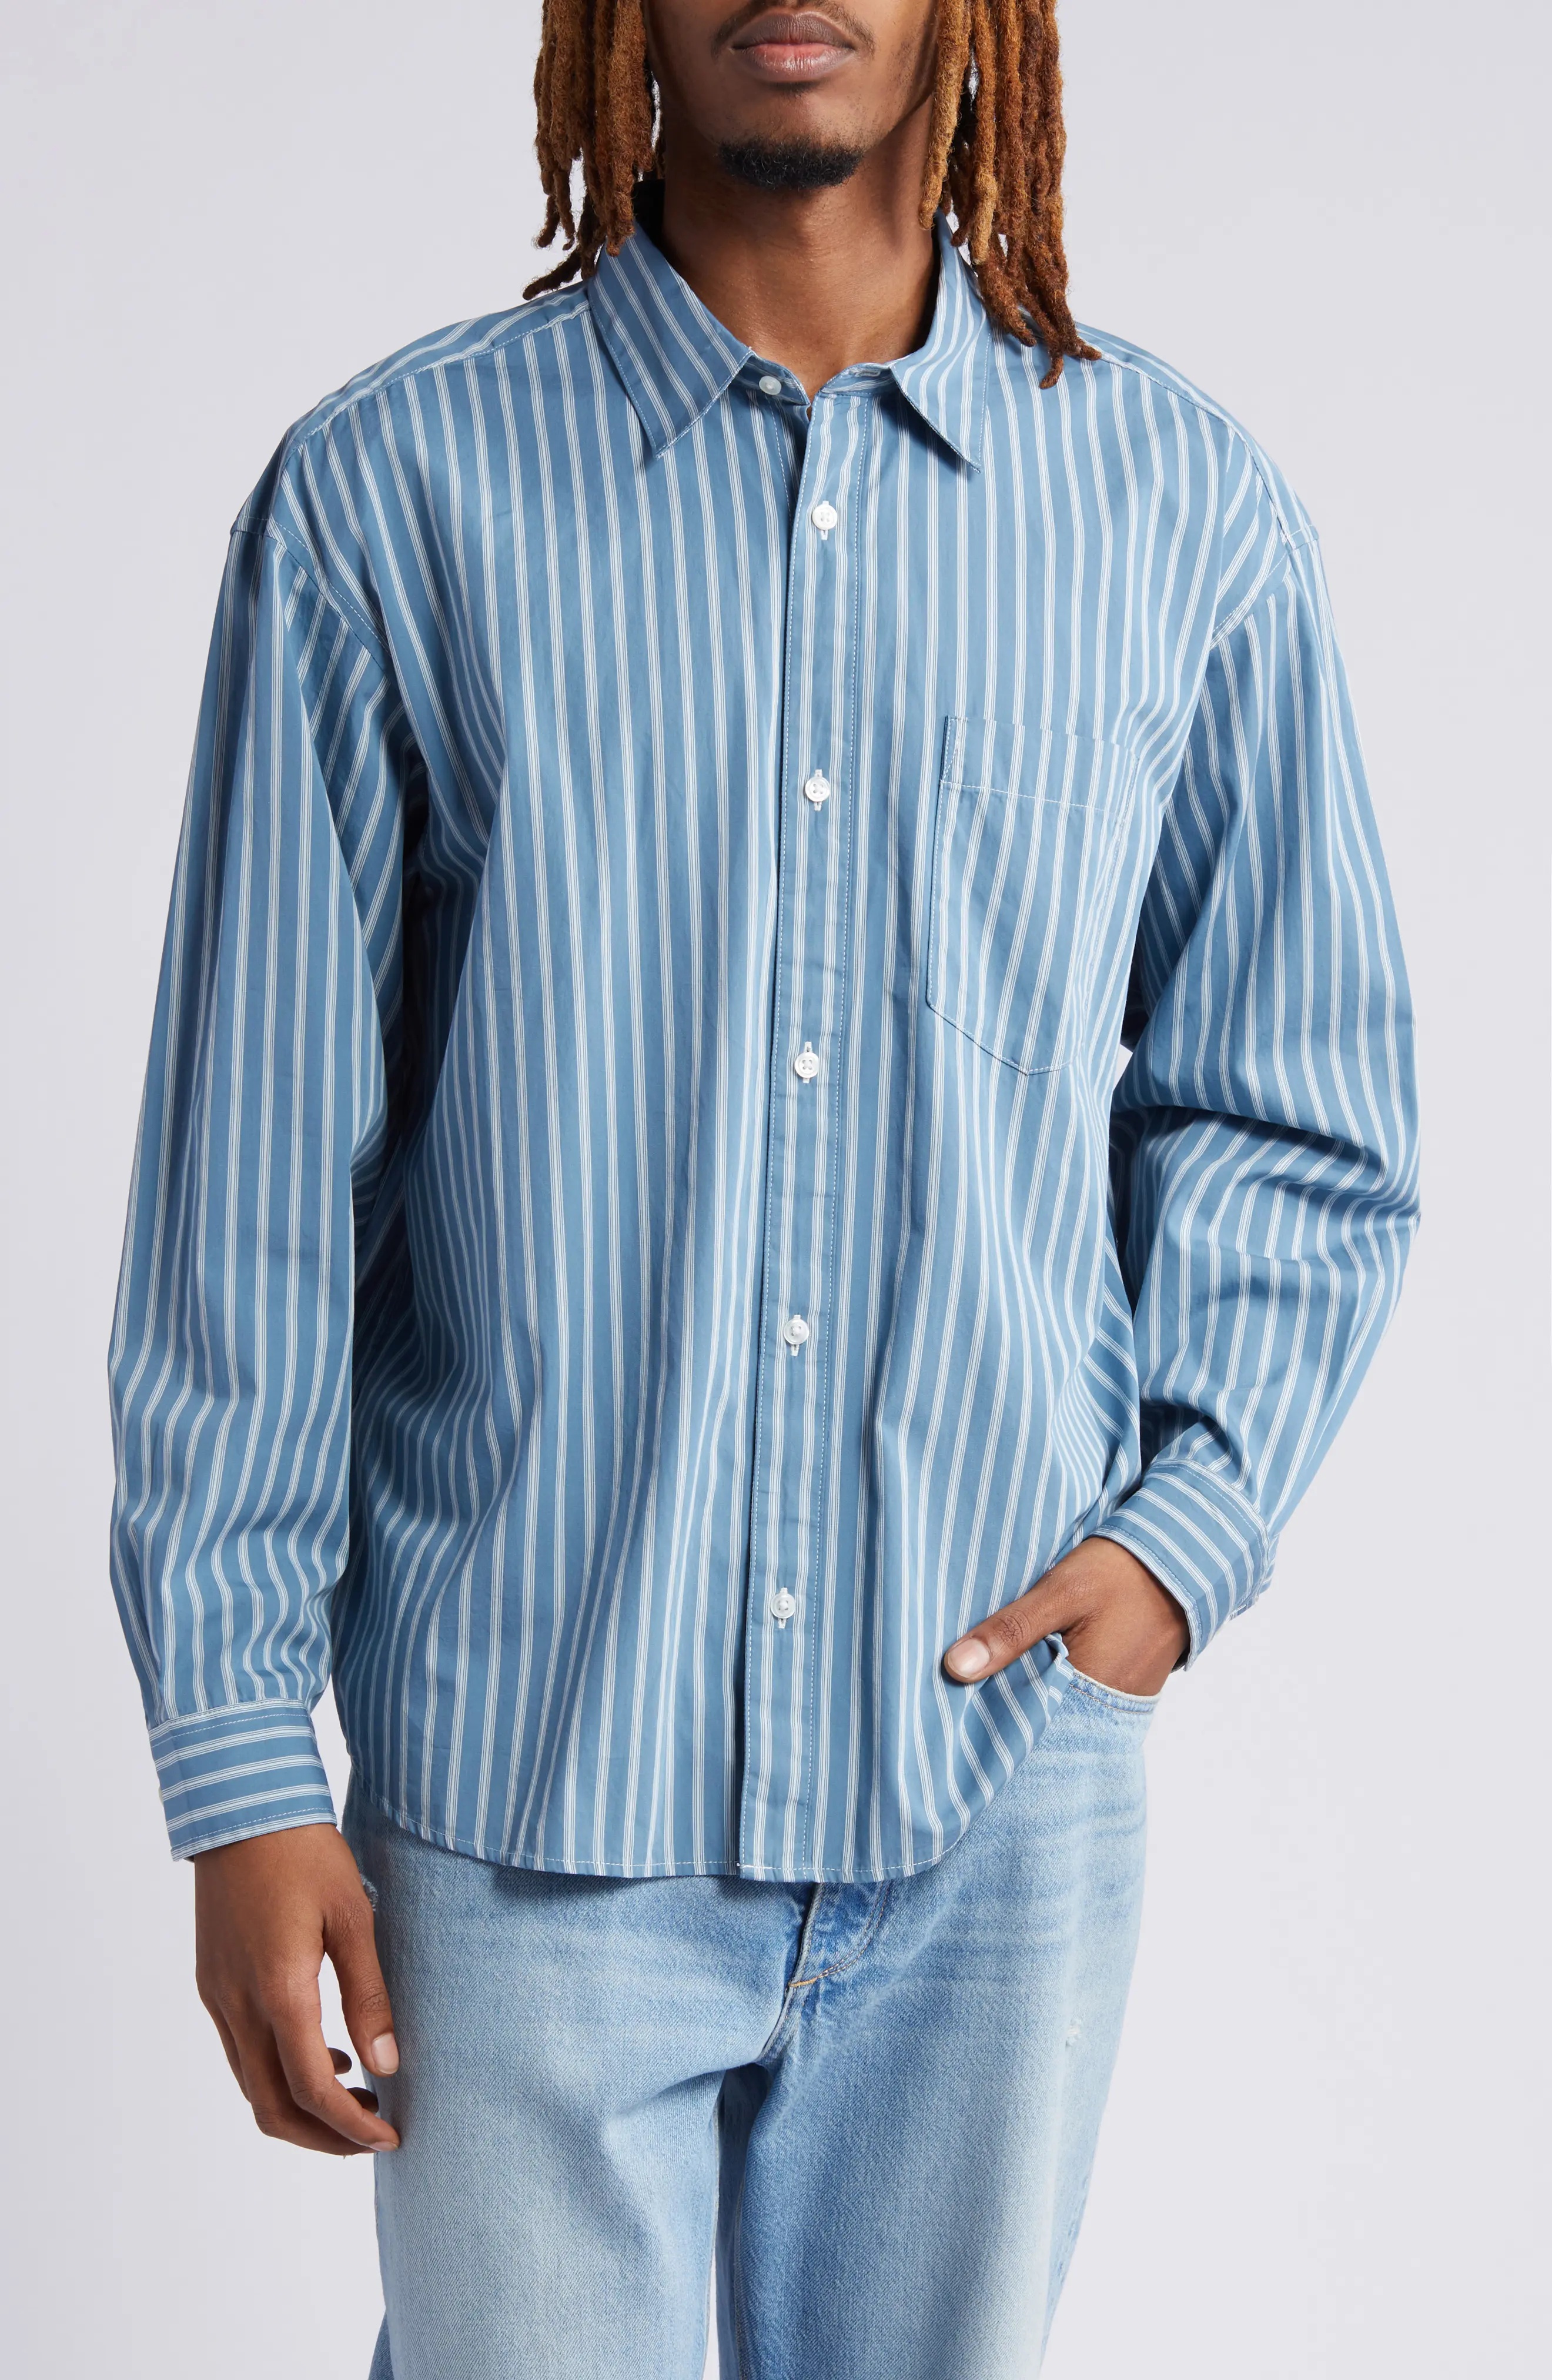 Ligety Stripe Button-Up Shirt in Ligety Stripe Blue/Wax - 2